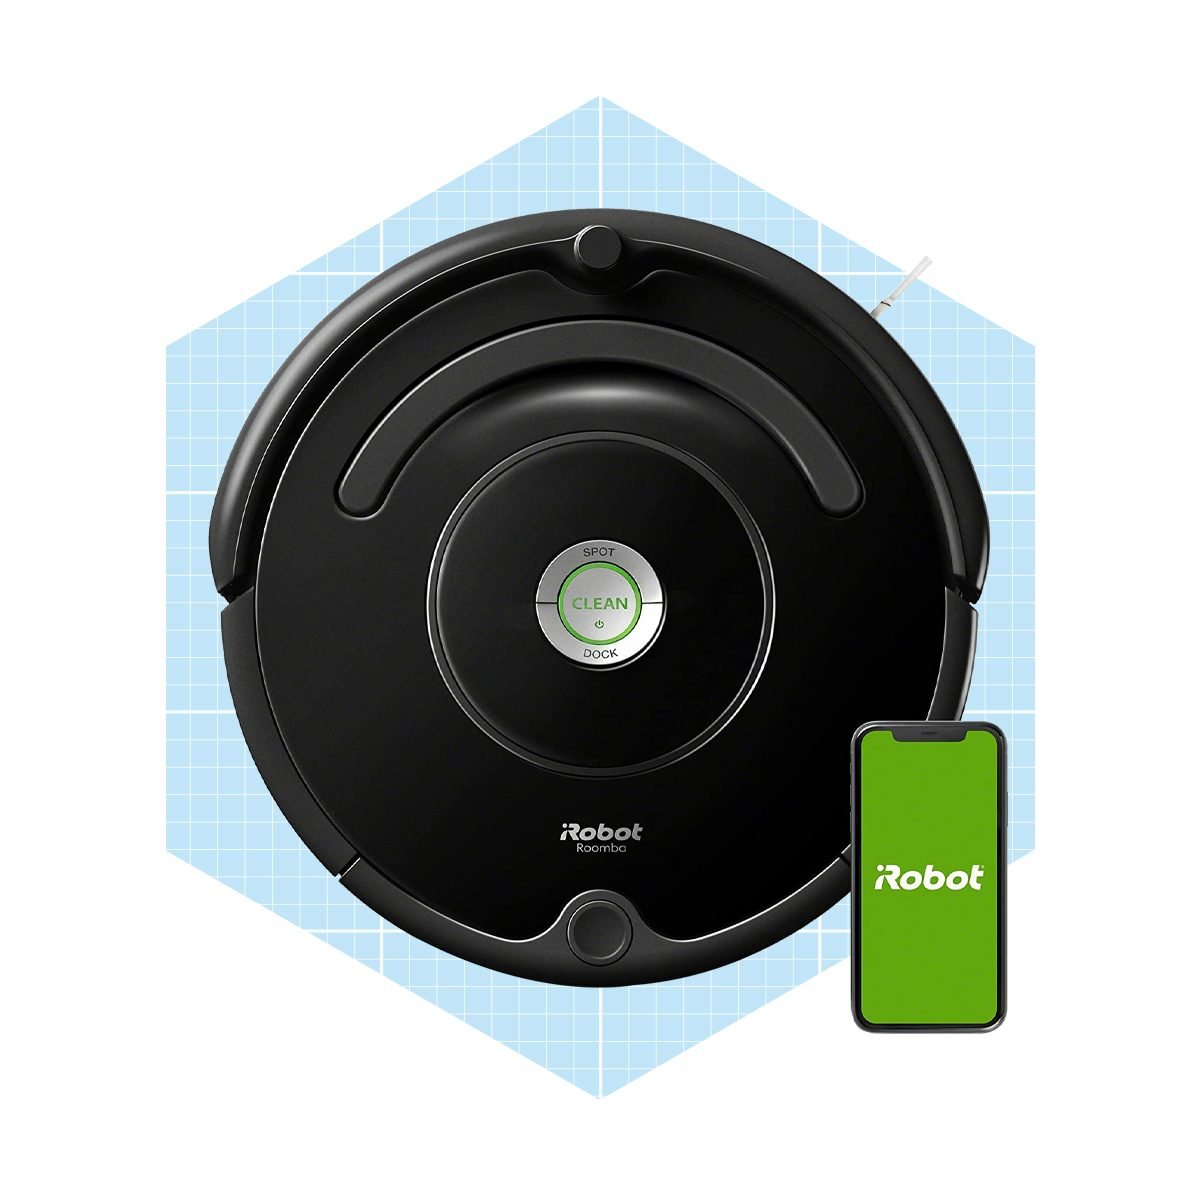 Irobot Roomba 671 Robot Vacuum Ecomm Amazon.com